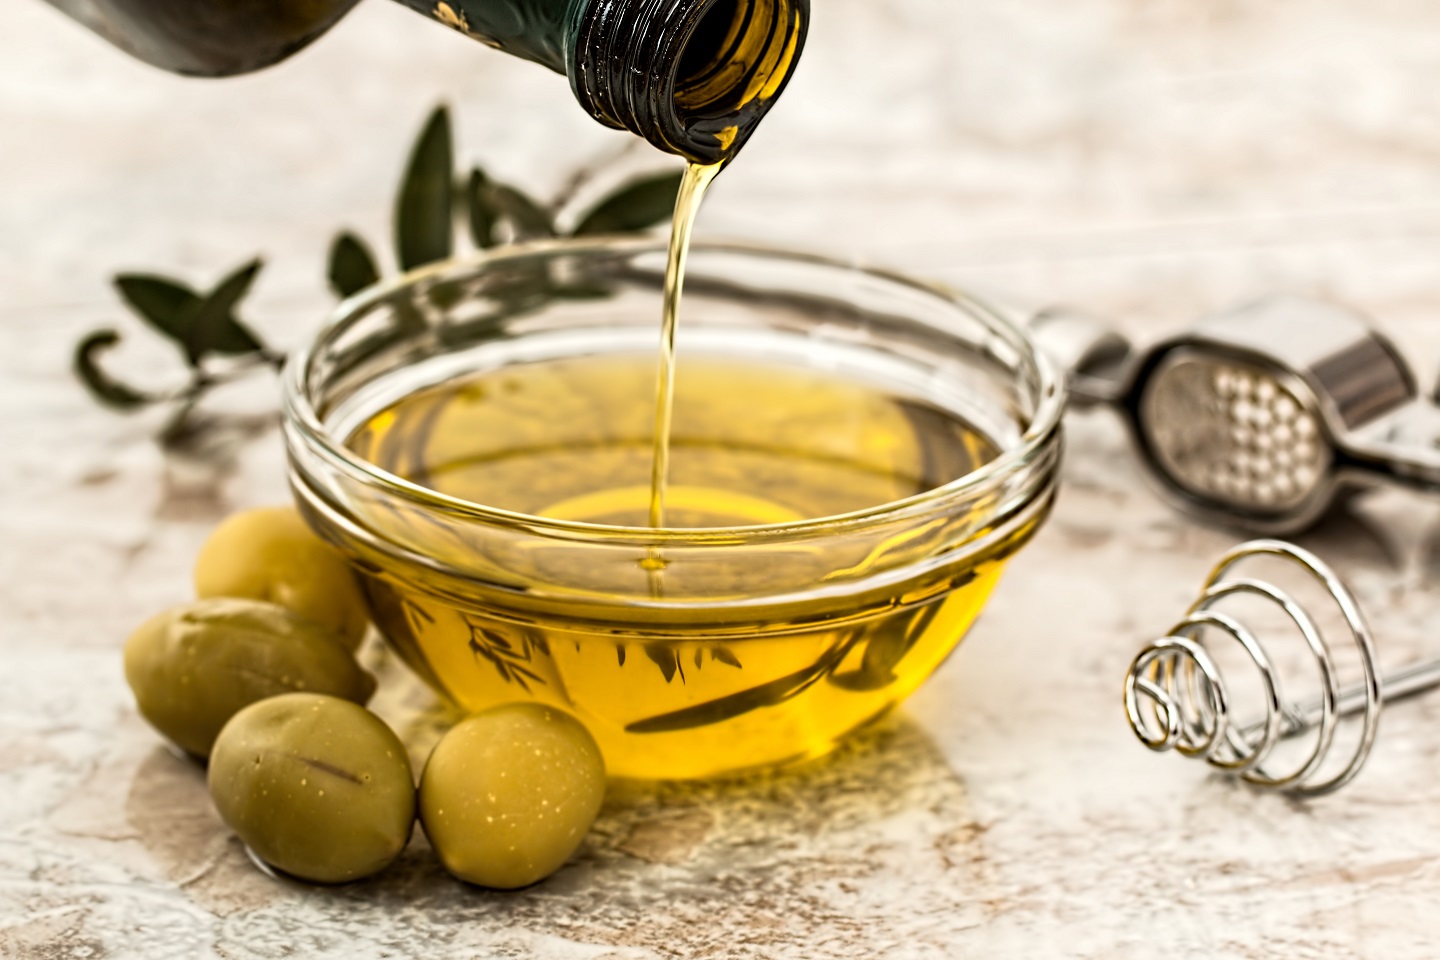 olive oil in glass bowl aceite de oliva en bowl de cristal